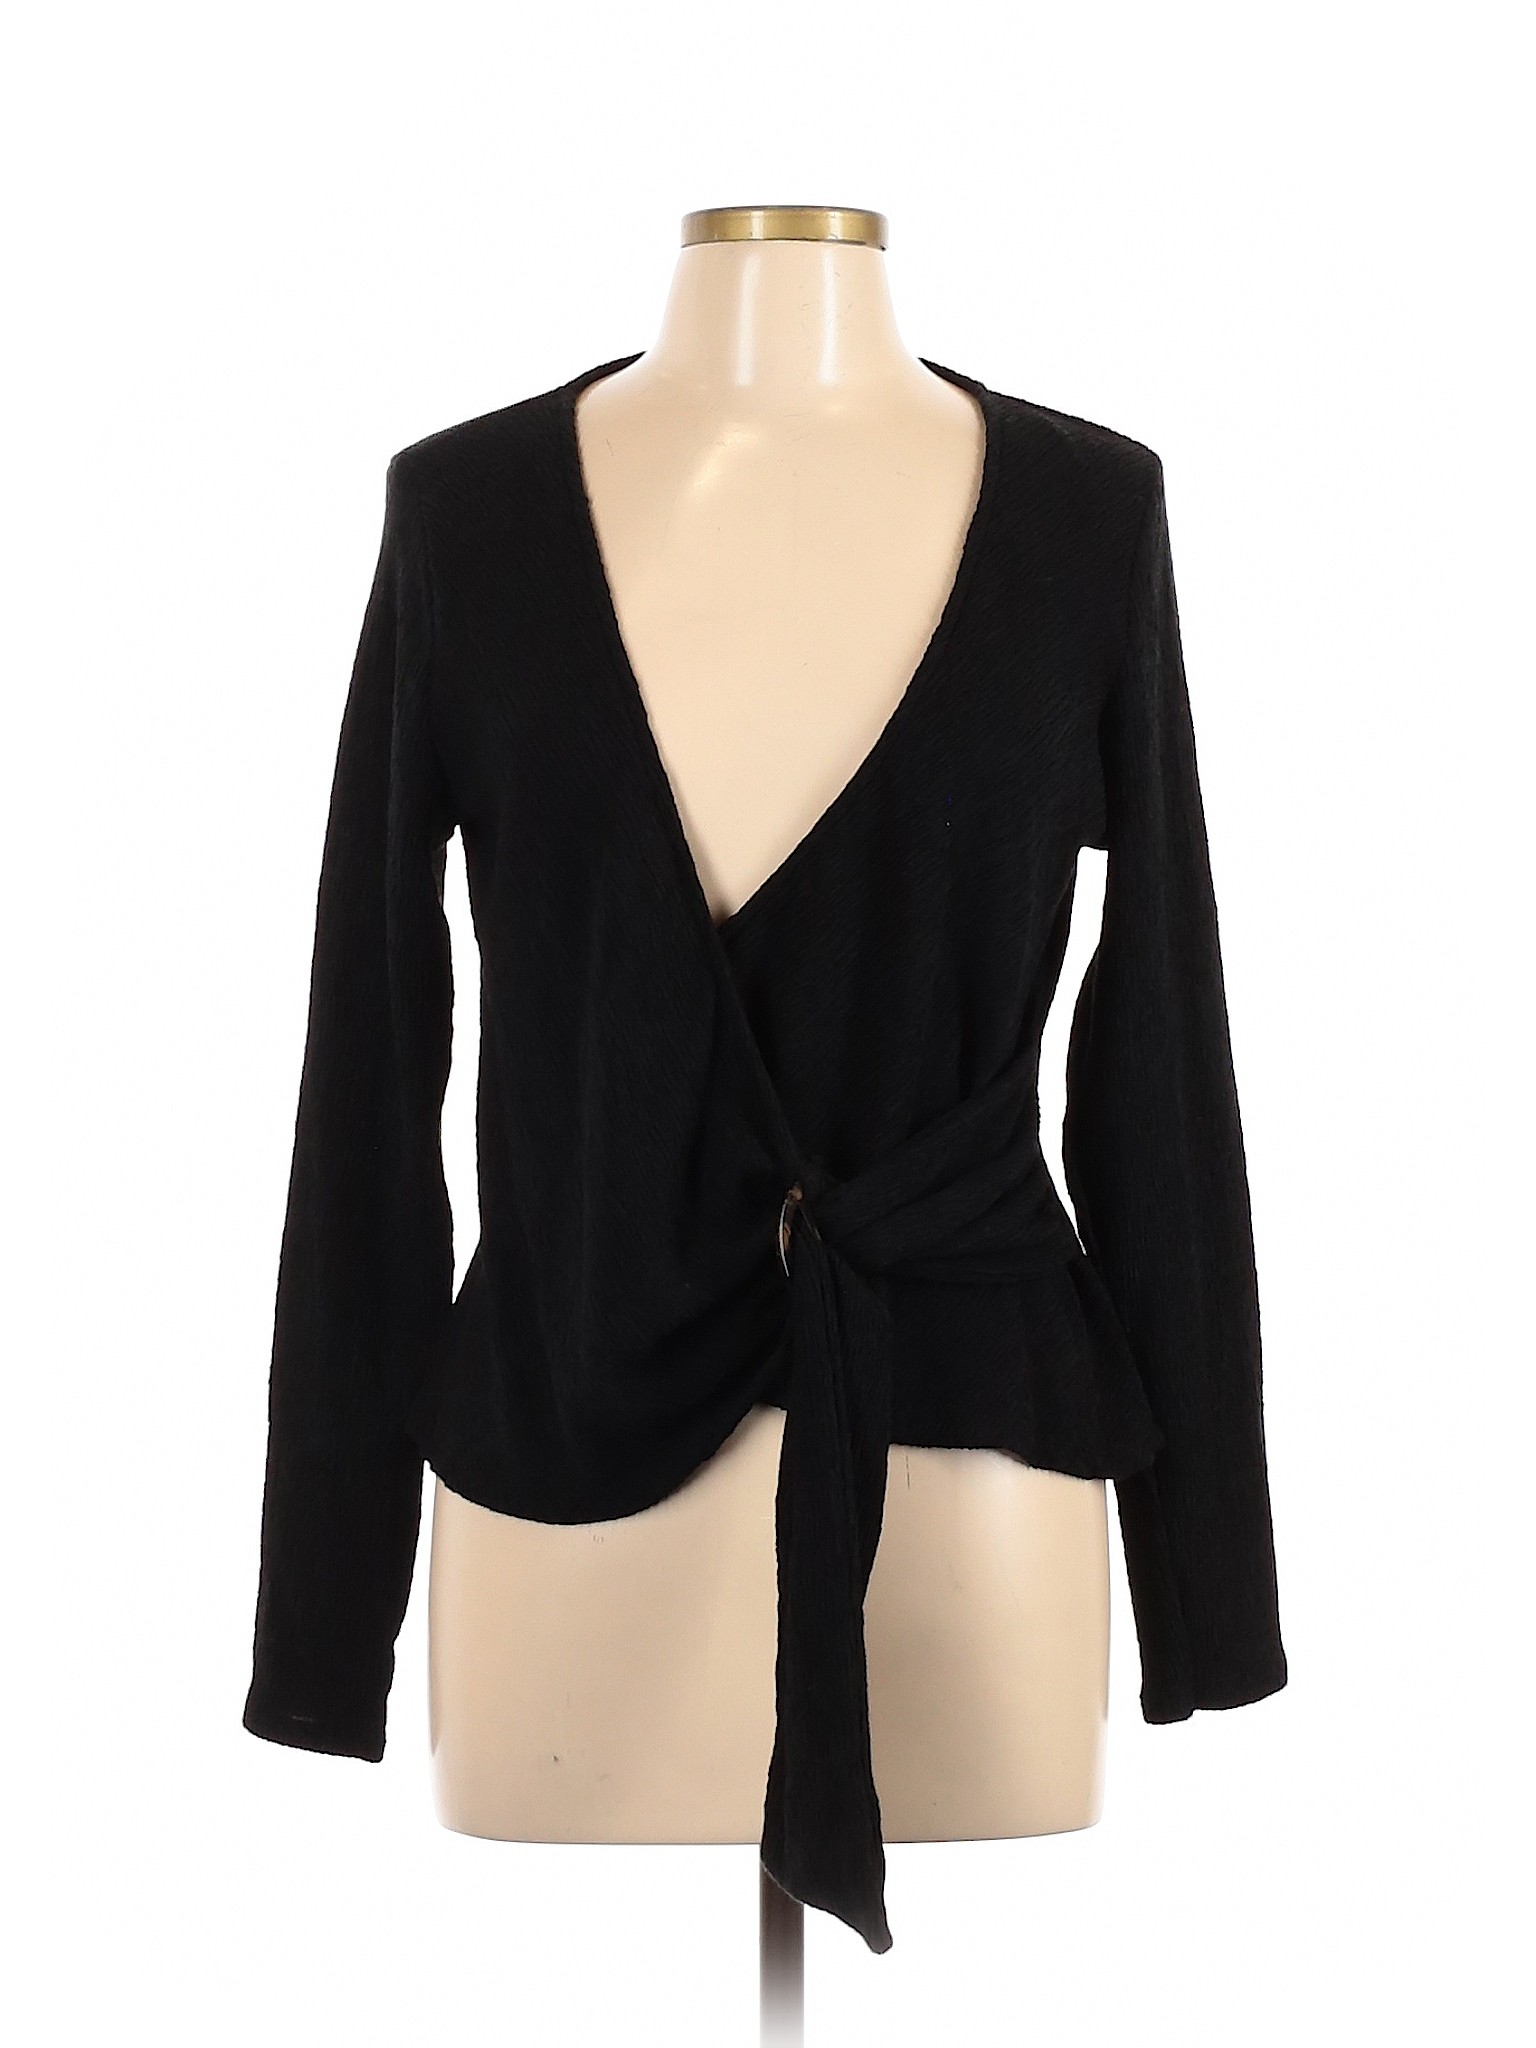 H&M Women Black Long Sleeve Top L | eBay